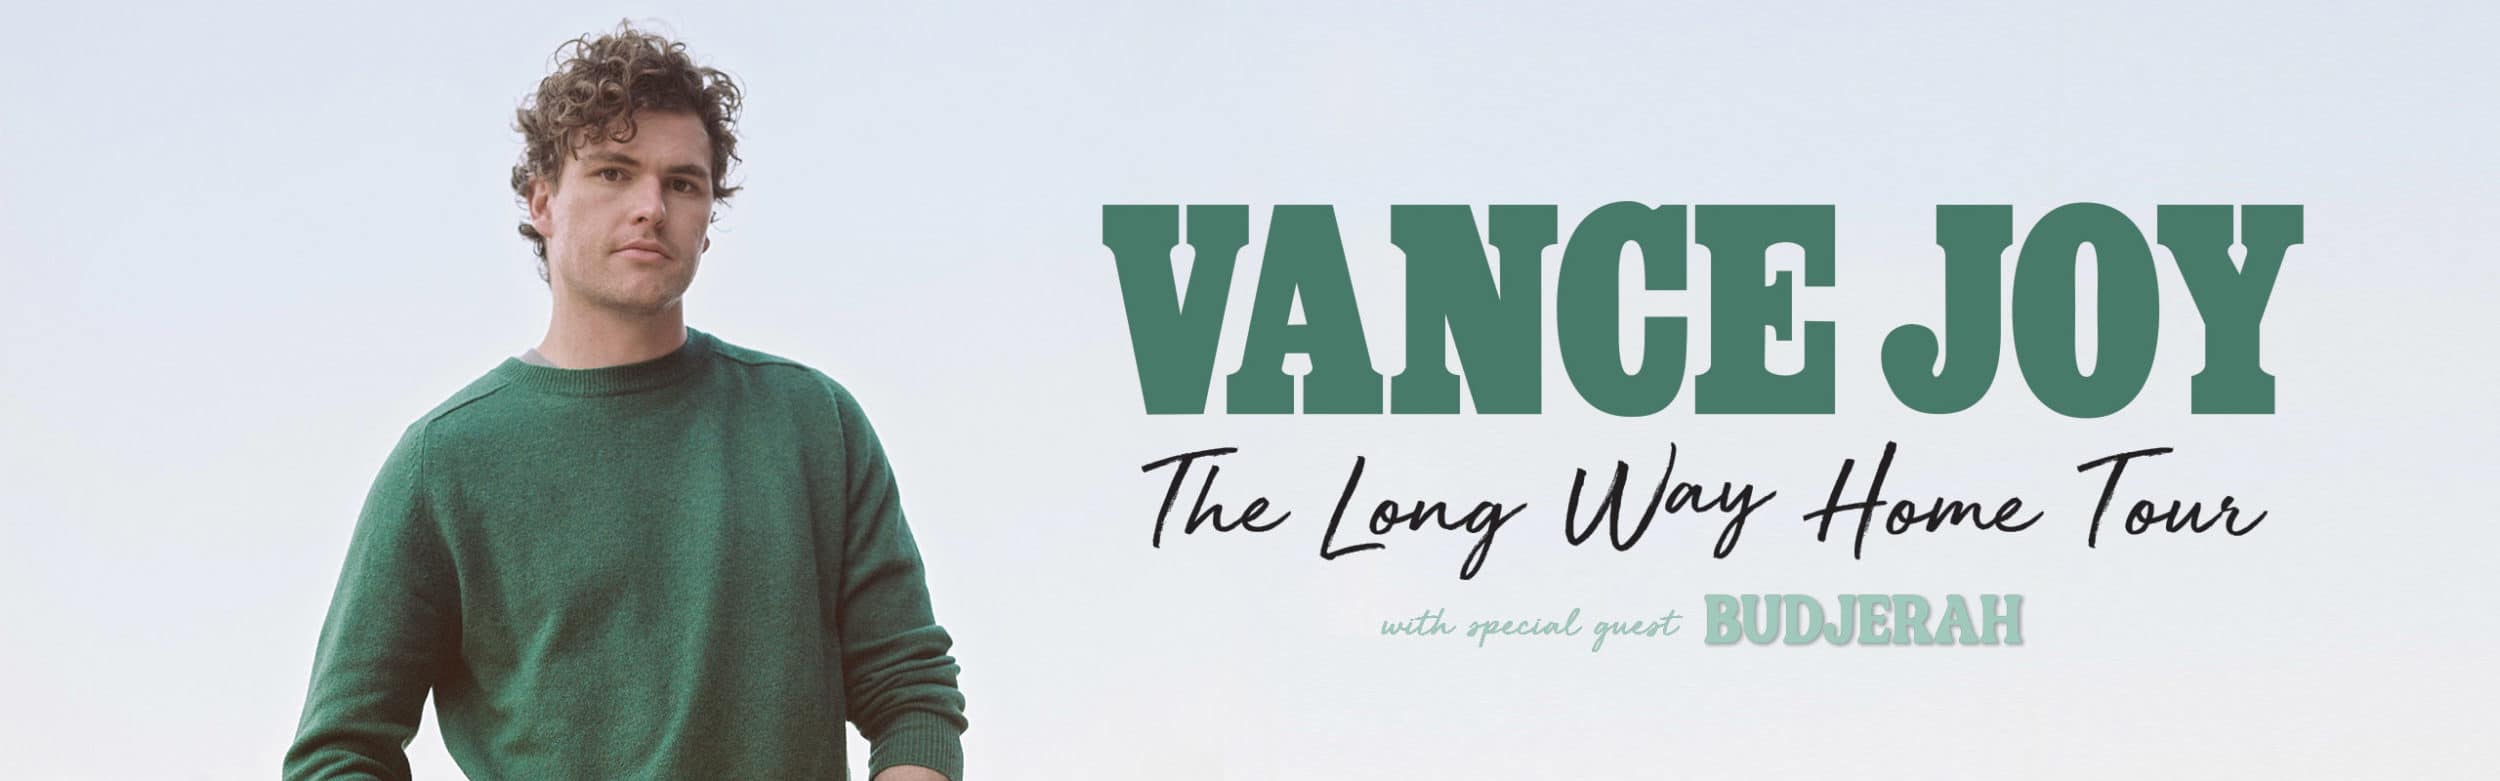 Vance Joy: The Long Way Home Tour